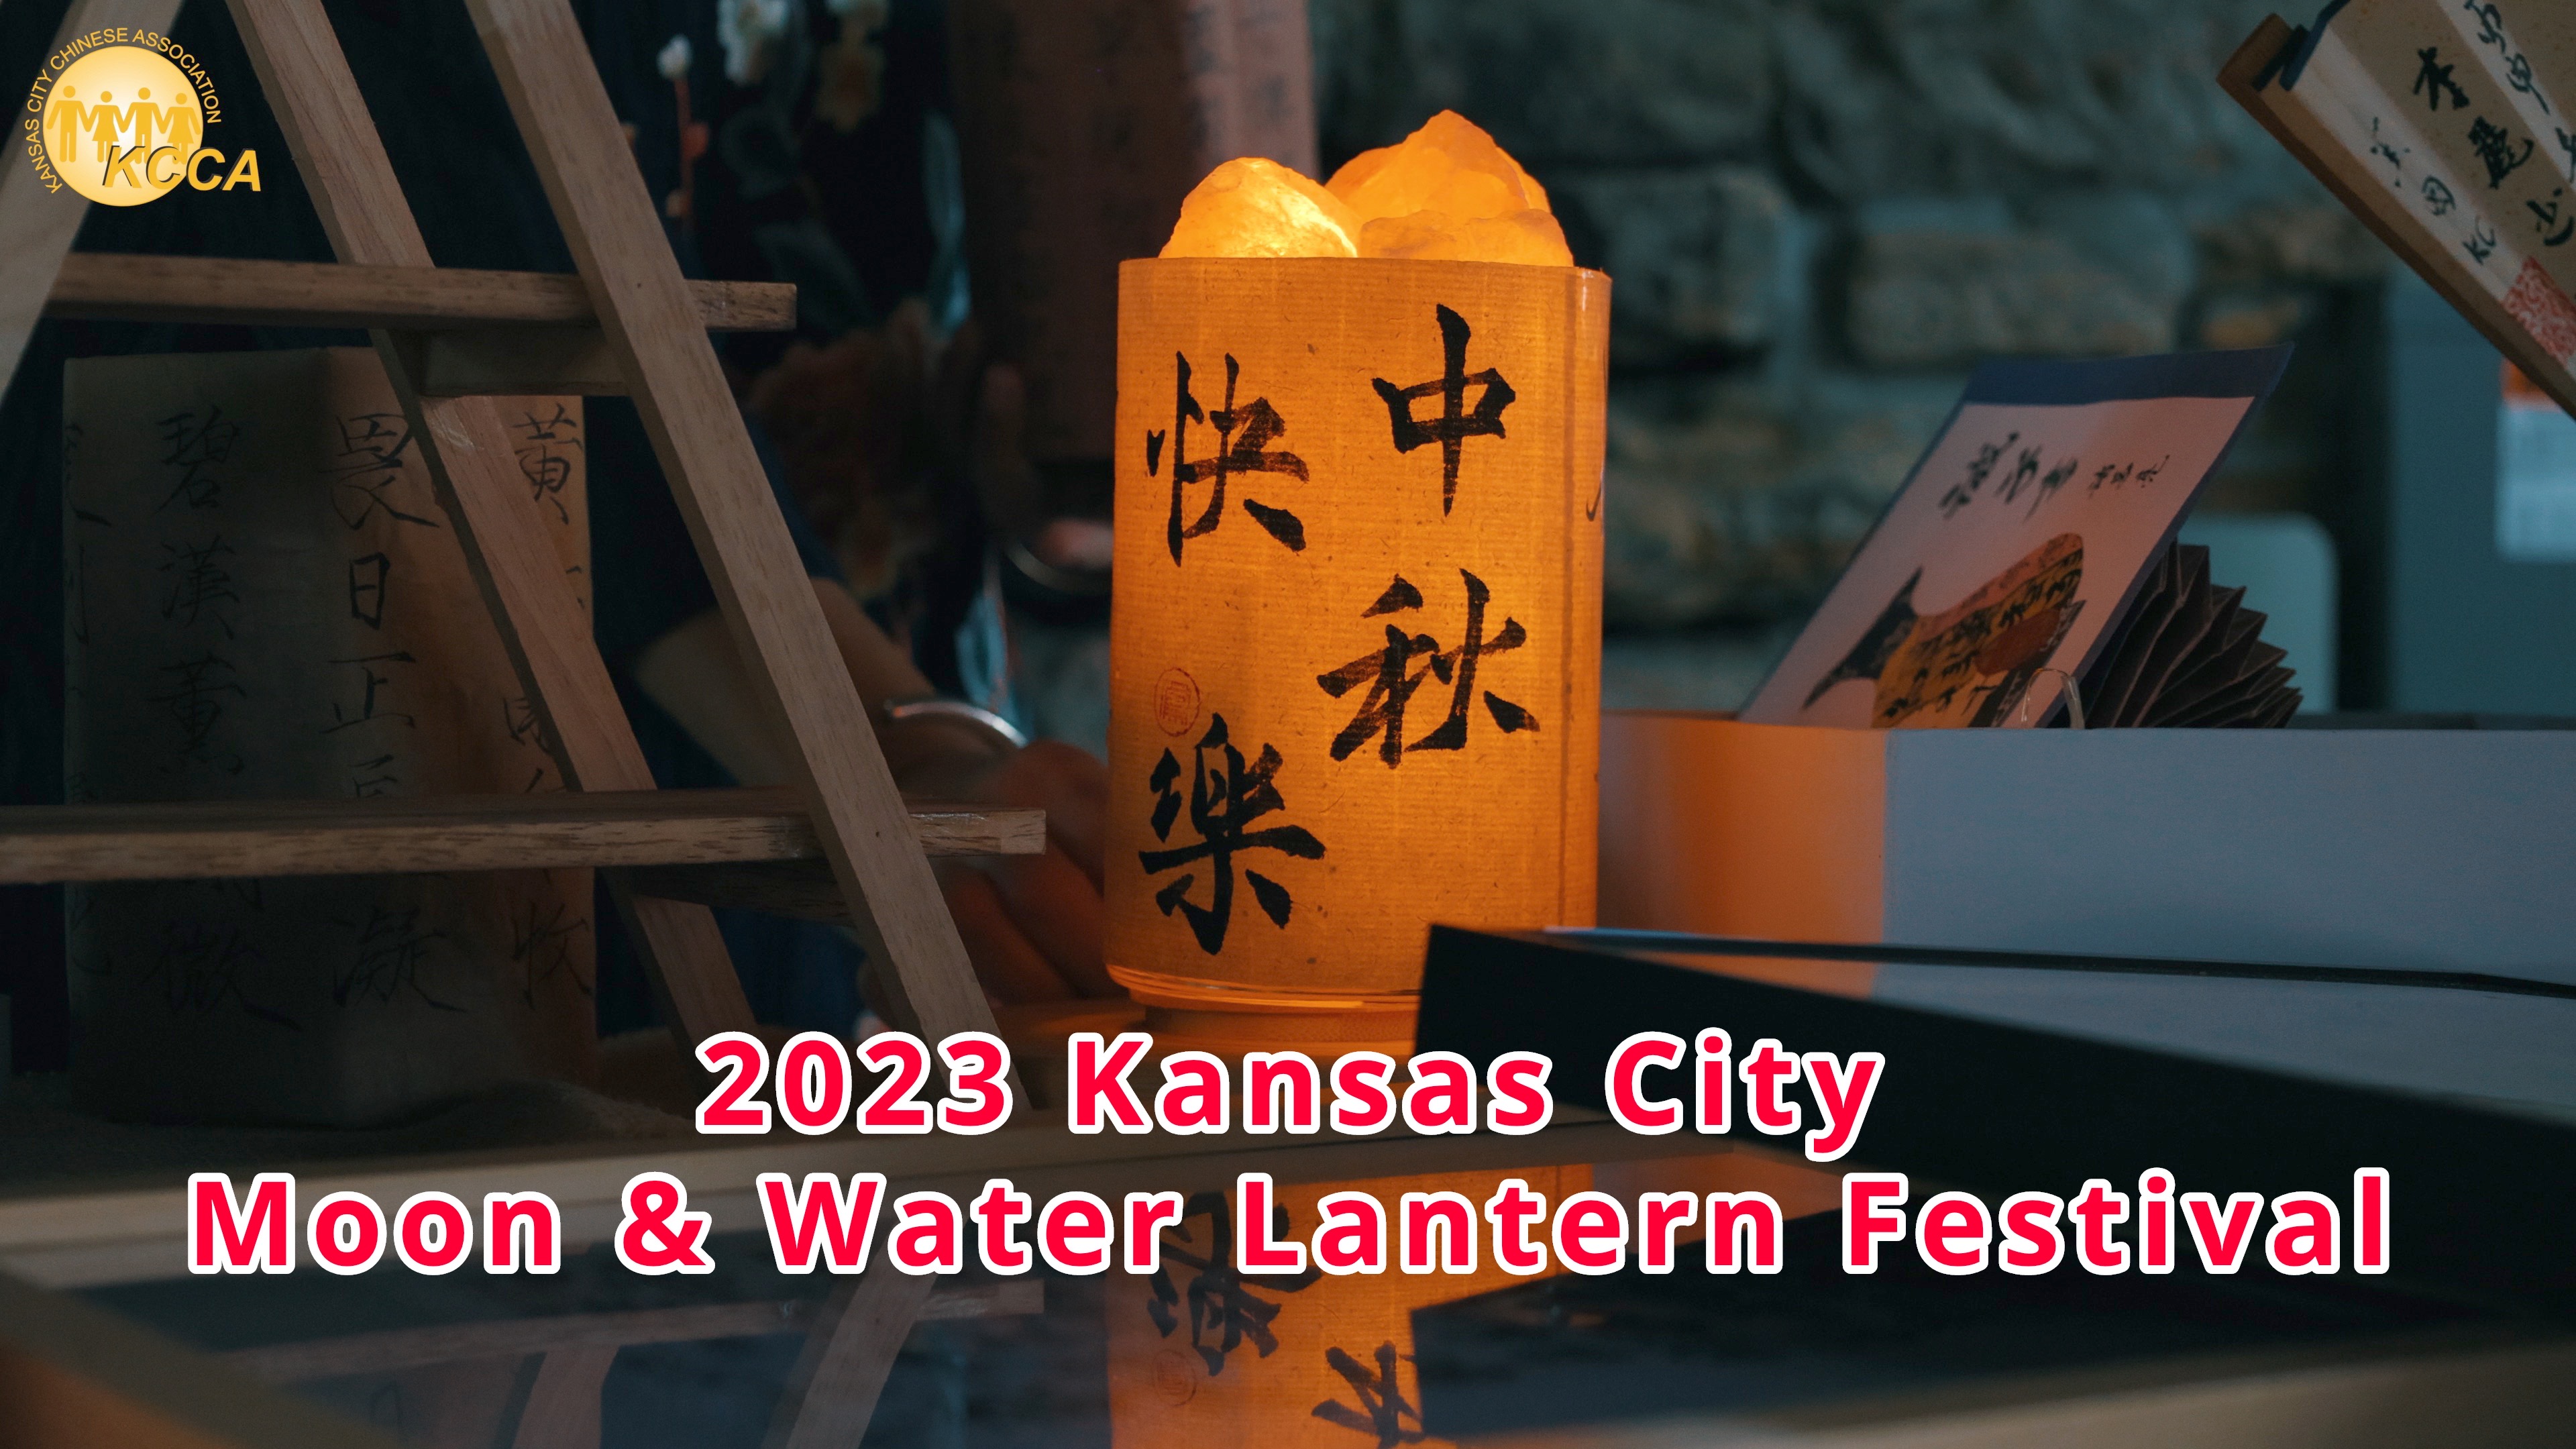 2023 Moon & Water Lantern Festival, Johnson, Kansas, United States